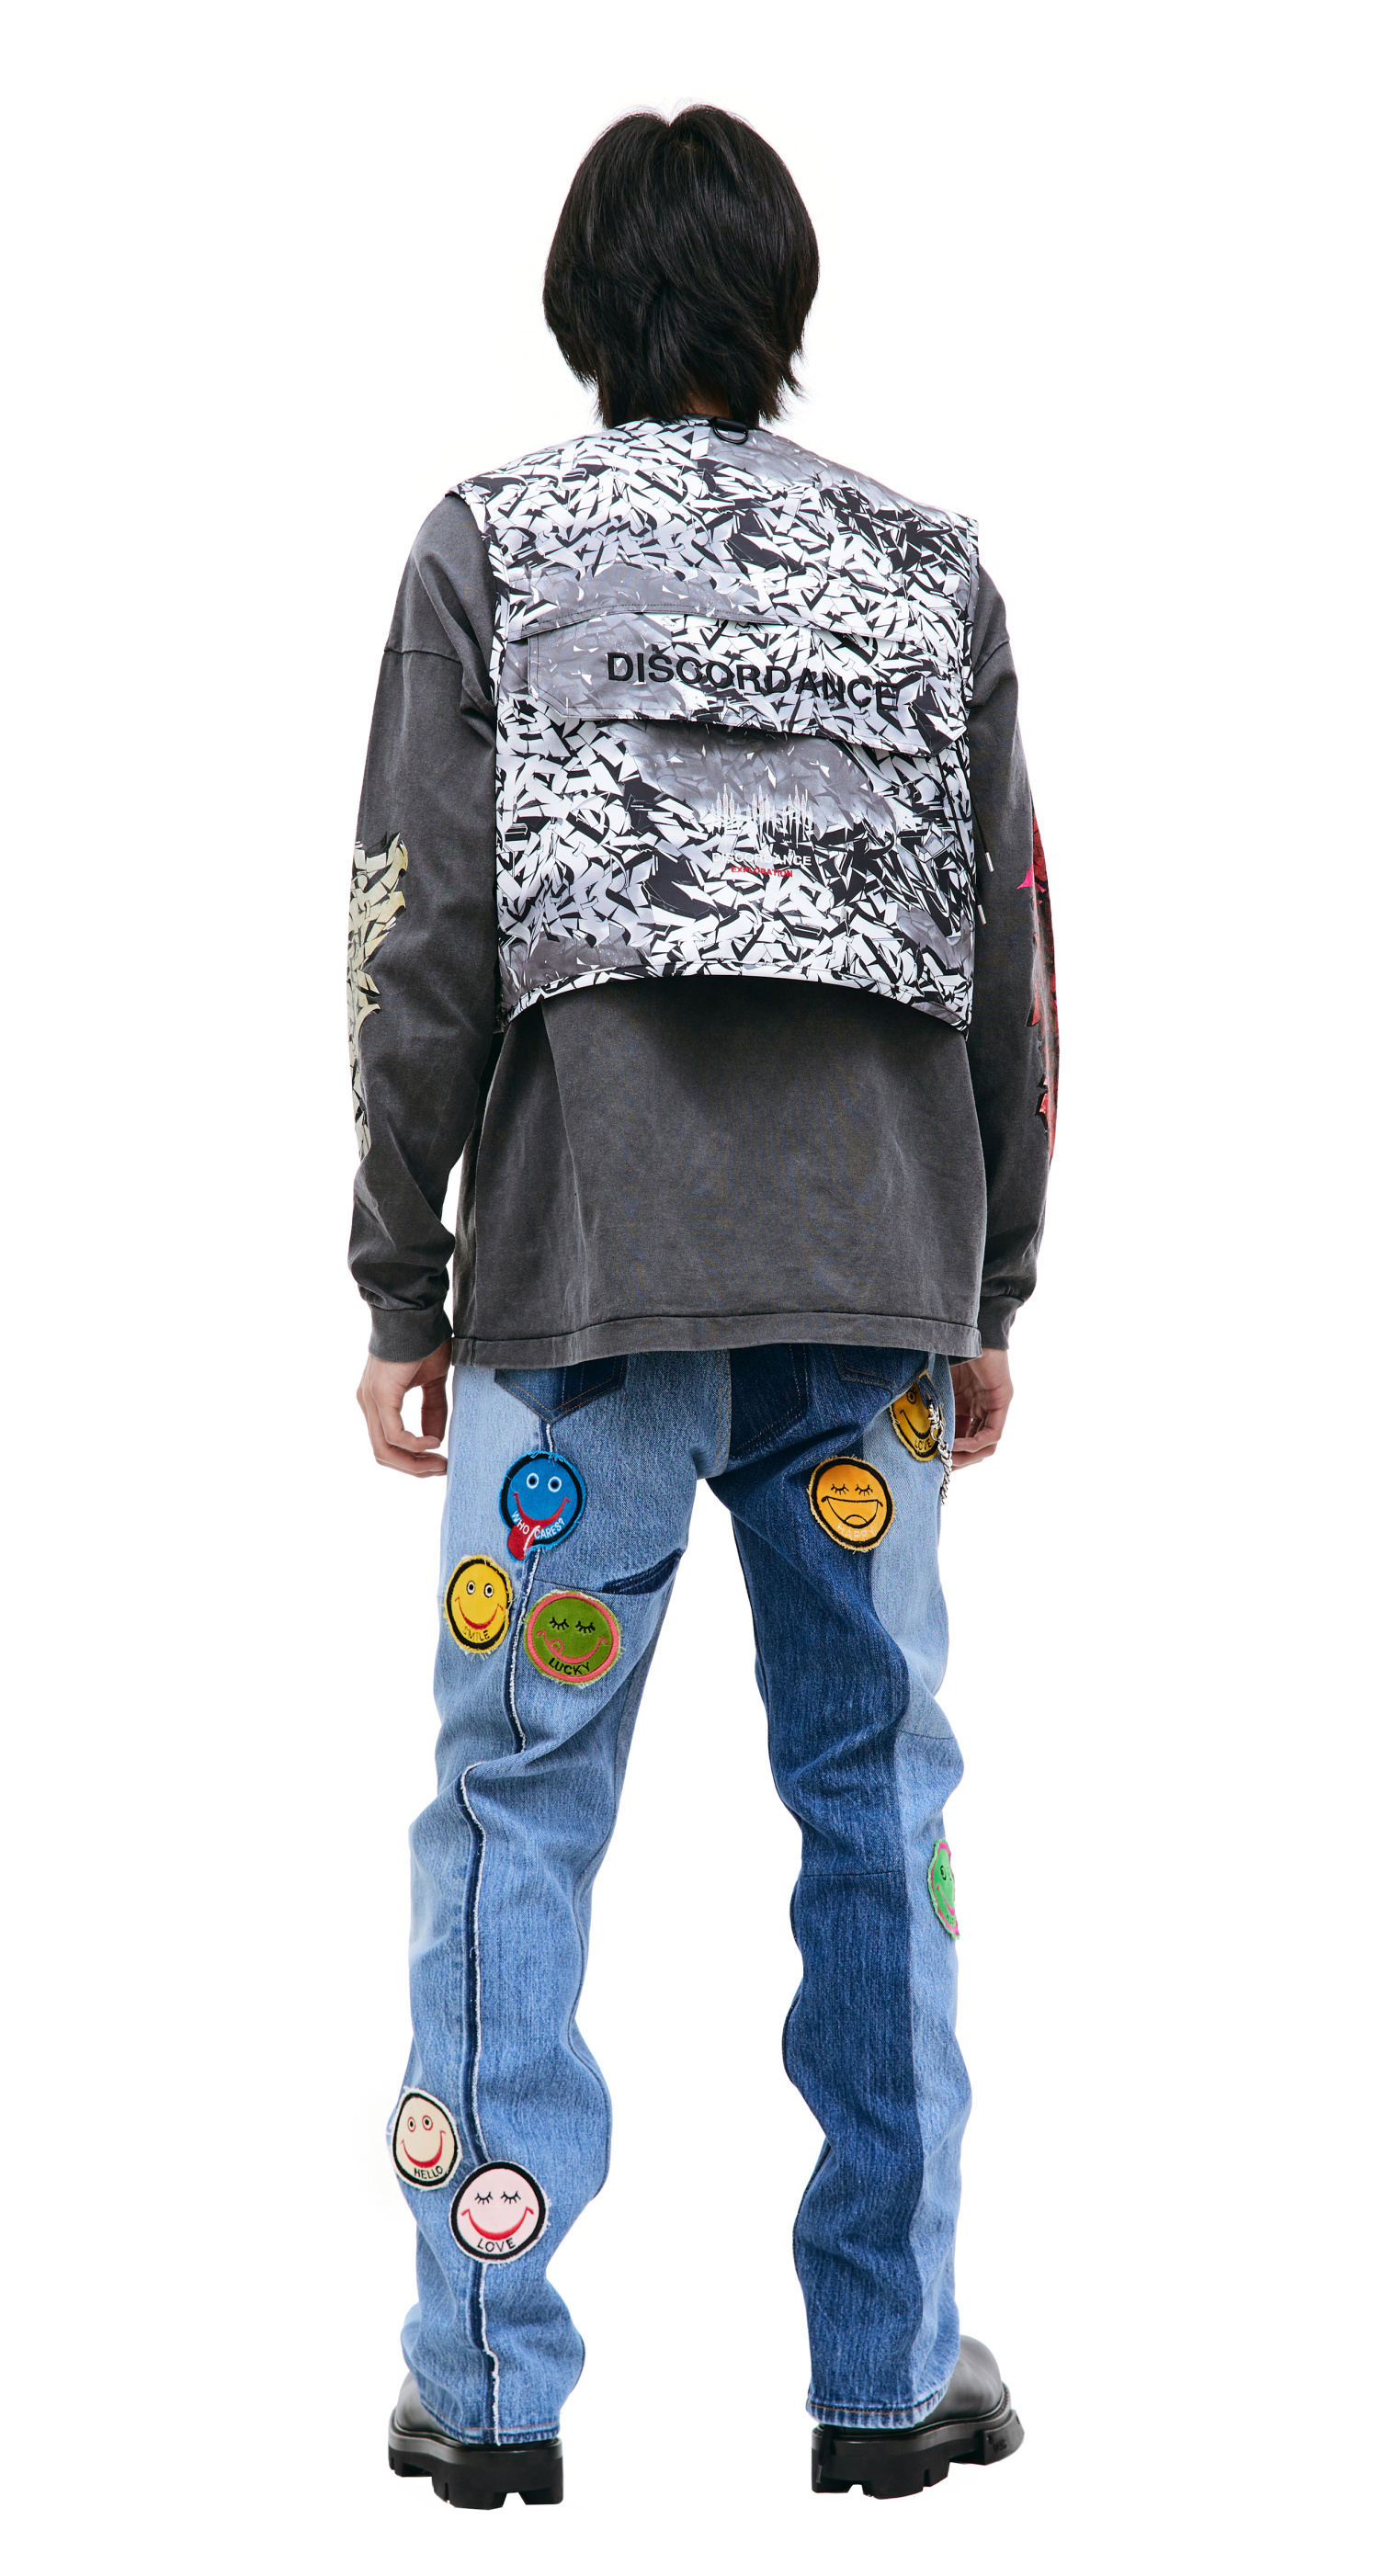 Children of the discordance 2AM graffiti vest